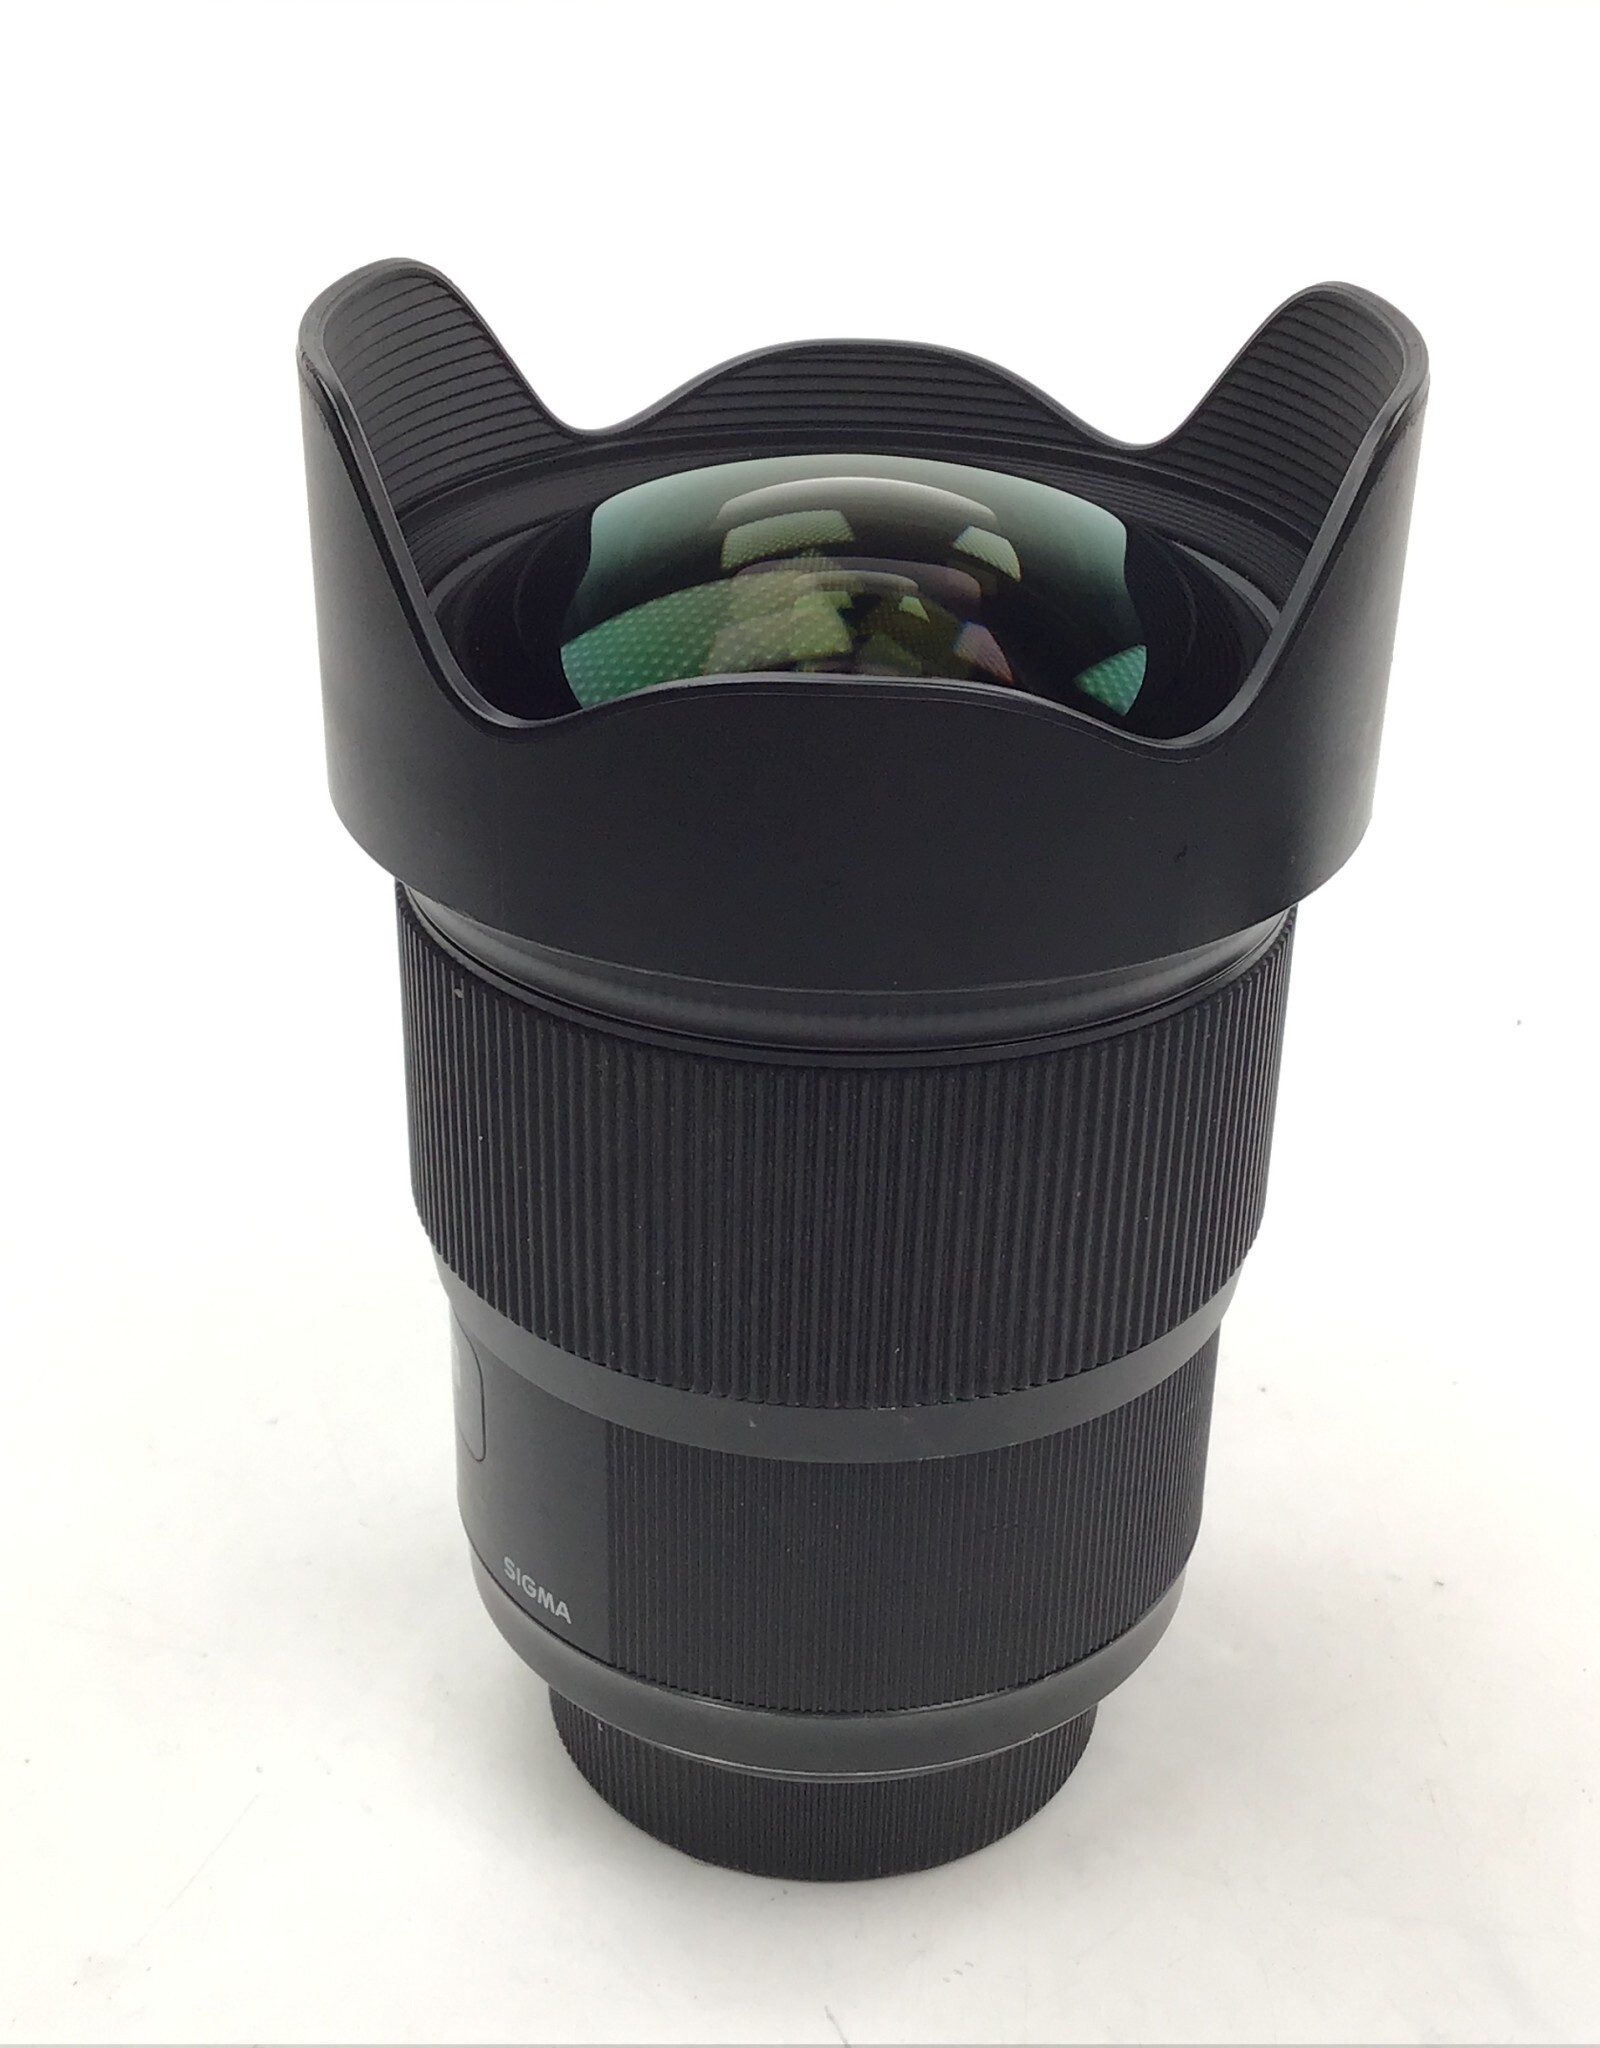 SIGMA Sigma Art 20mm f1.4 DG Lens for Nikon Used Fair